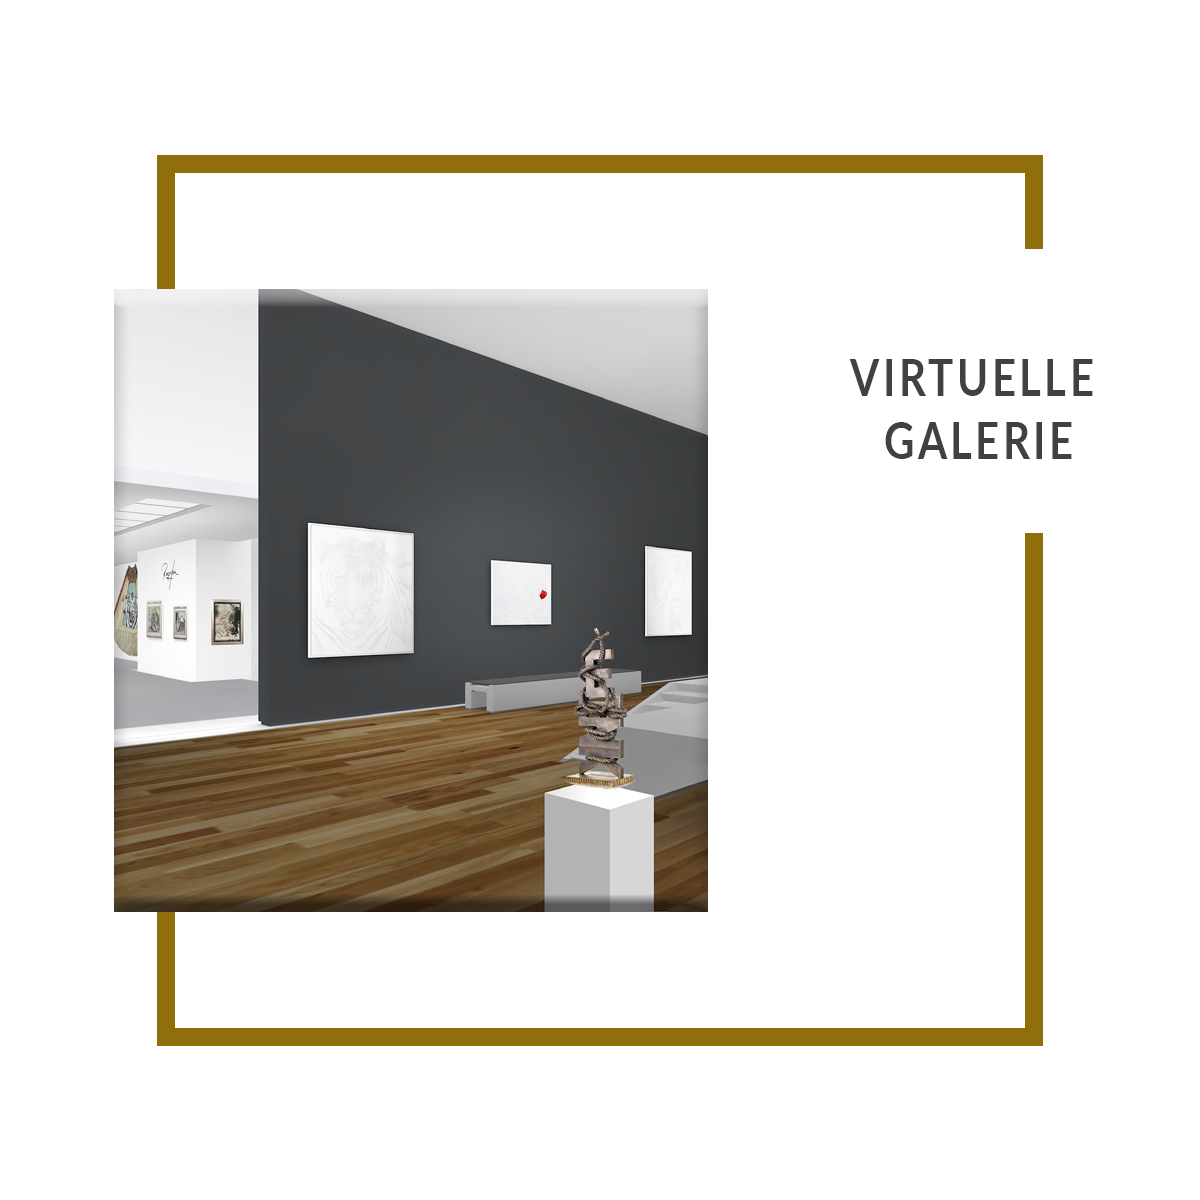 Virtuelle Galerie